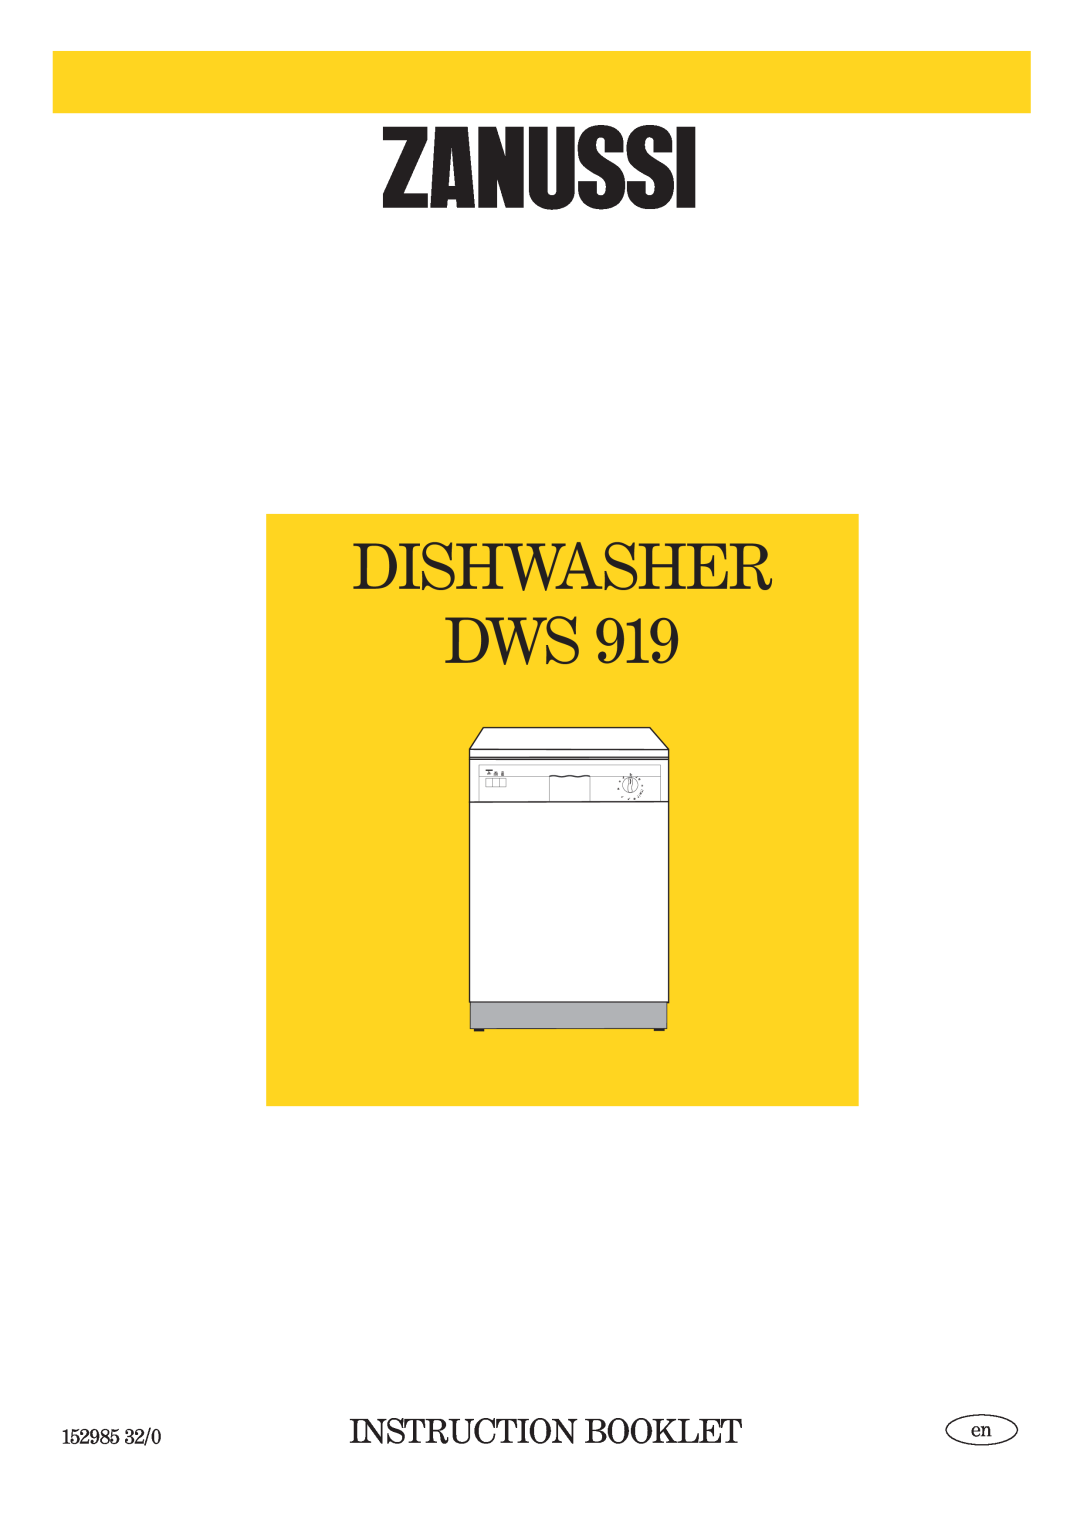 Zanussi DWS 919 manual Dishwasher Dws, Instruction Booklet, 152985 32/0 